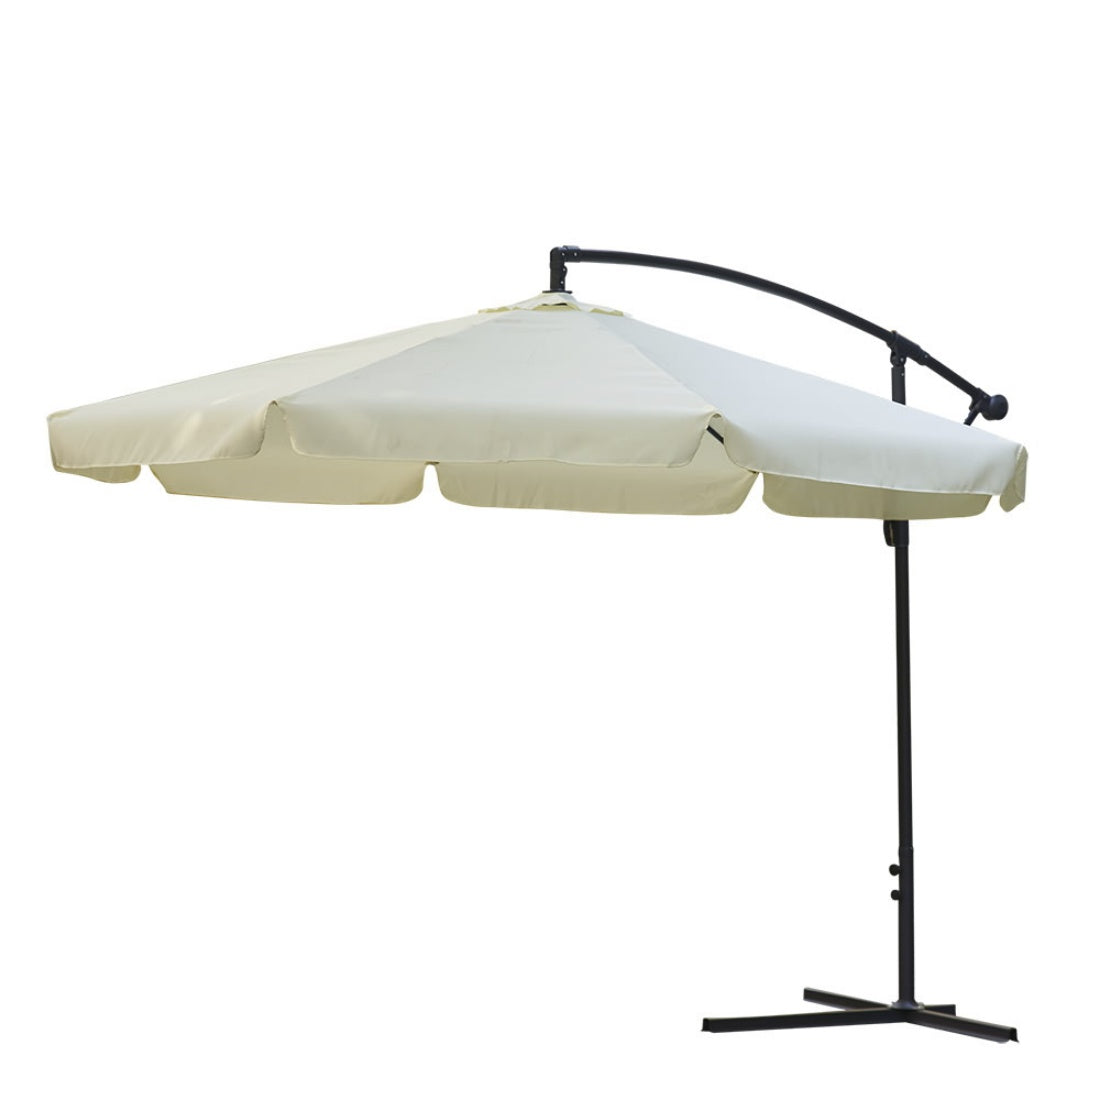 3m Perfect Oasis Beige Garden Umbrella Cantilever Outdoor Shade